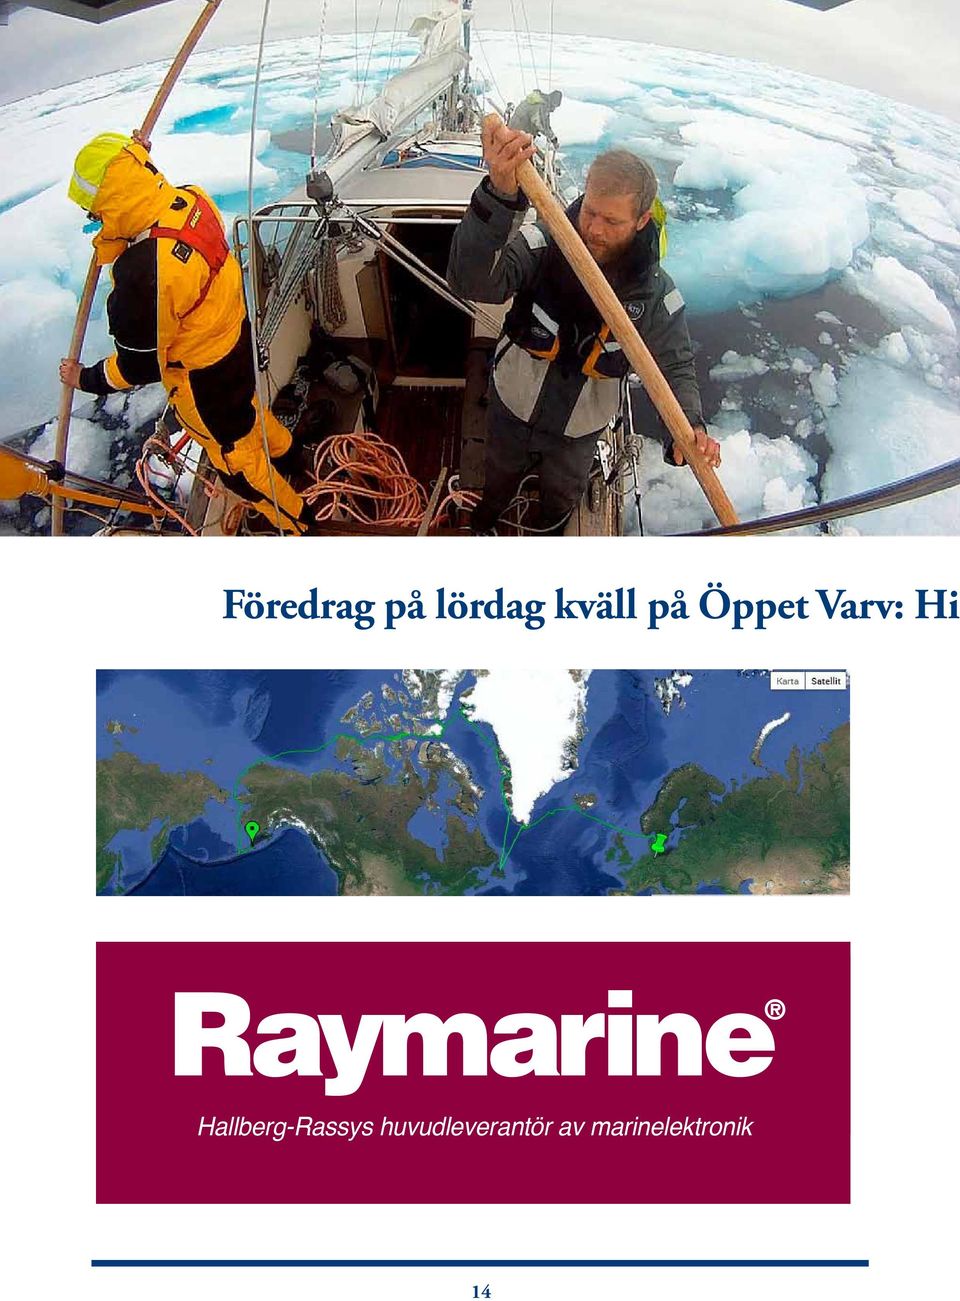 or visit Hallberg-Rassys huvudleverantör av marinelektronik www.raymarine.